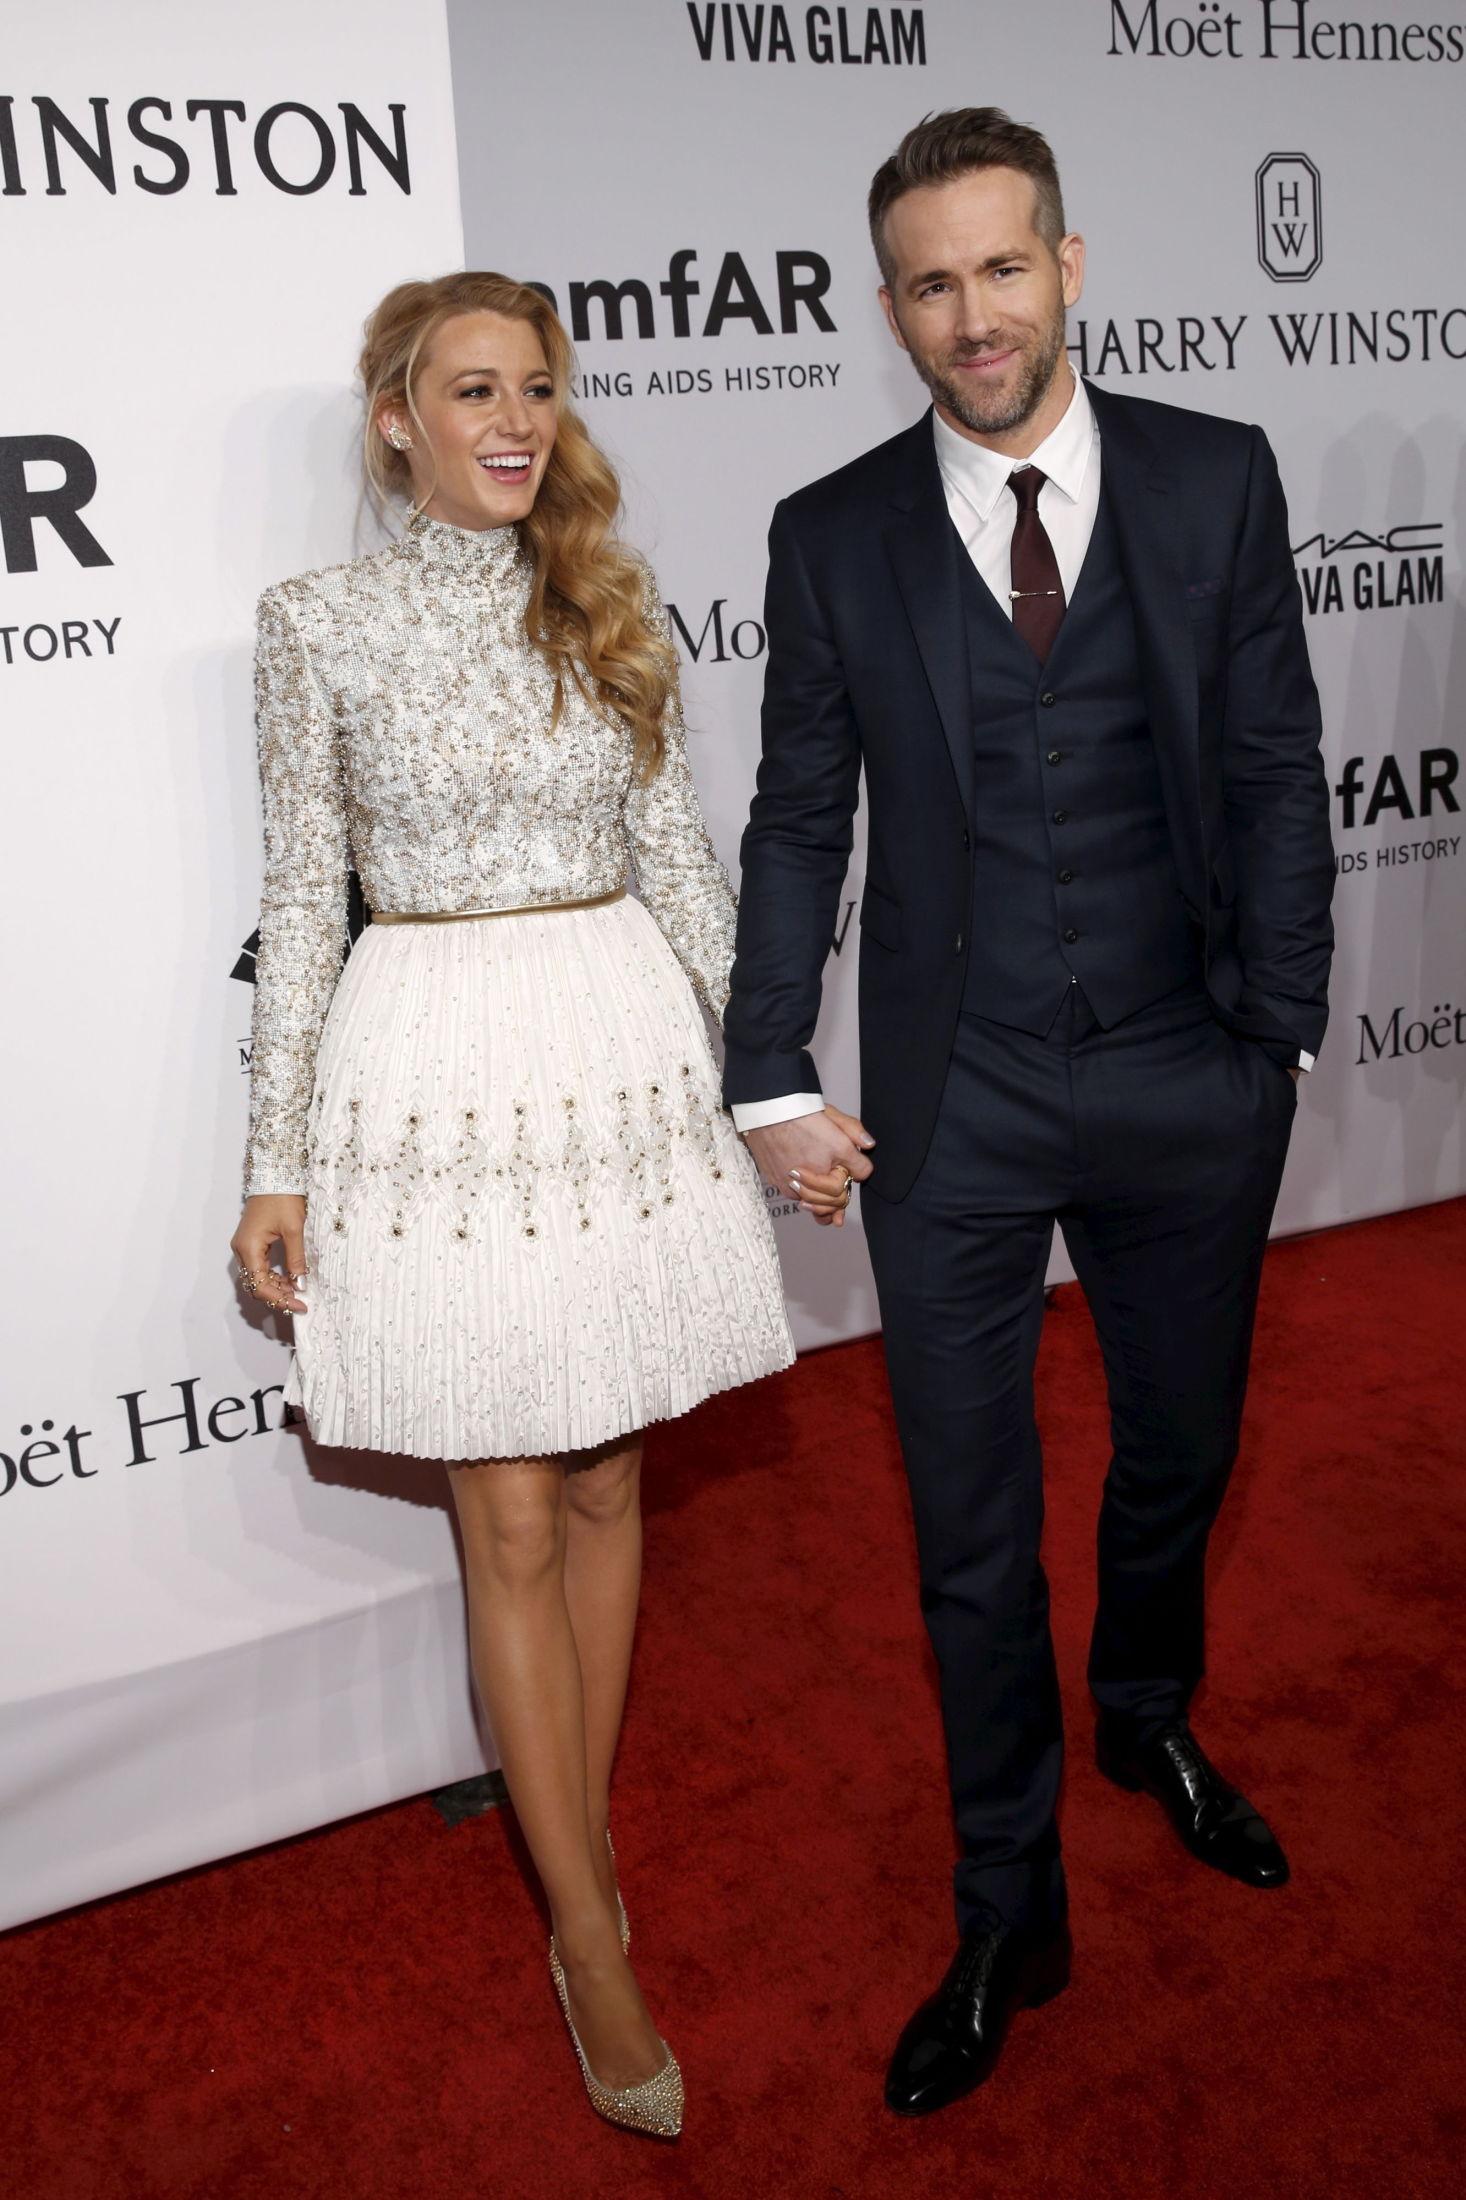 STRÅLTE: Blake Lively og Ryan Reynolds ankom sammen til gallaen. Blake hadde på seg en hvit, chic kjole med høy hals og lange ermer. Reynolds gikkf or en klassisk blå dress med vest. Foto: NTB scanpix